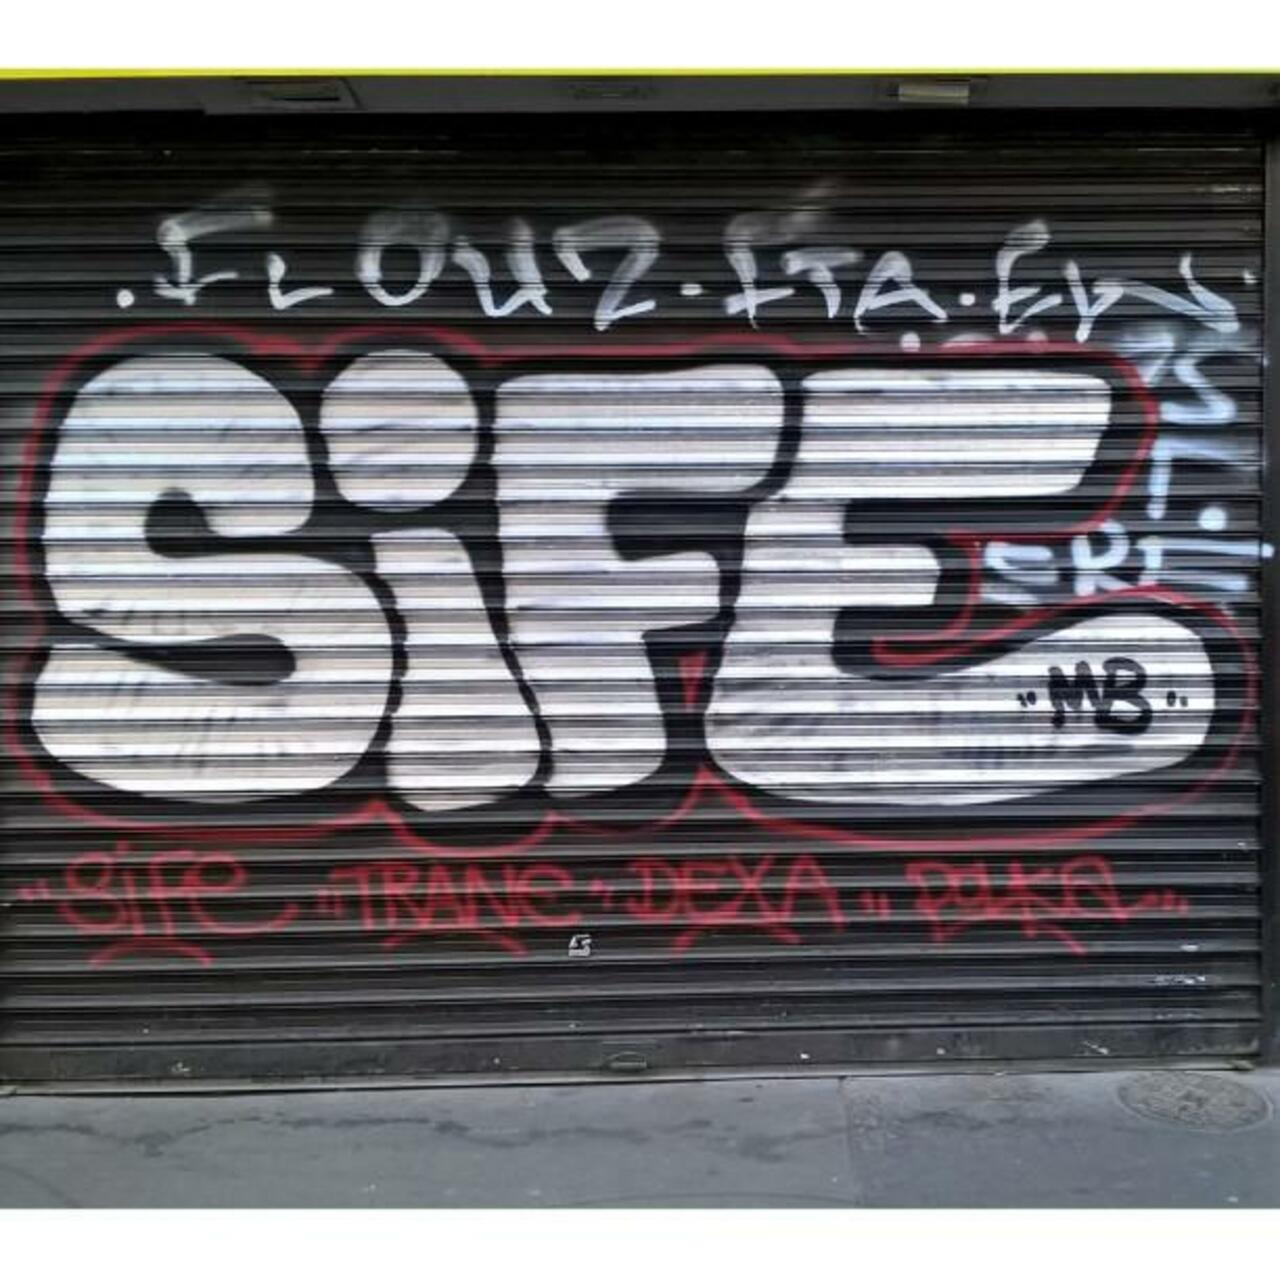 circumjacent_fr: #Paris #graffiti photo by maxdimontemarciano http://ift.tt/1LZMxNE #StreetArt http://t.co/Sryjt51xsJ